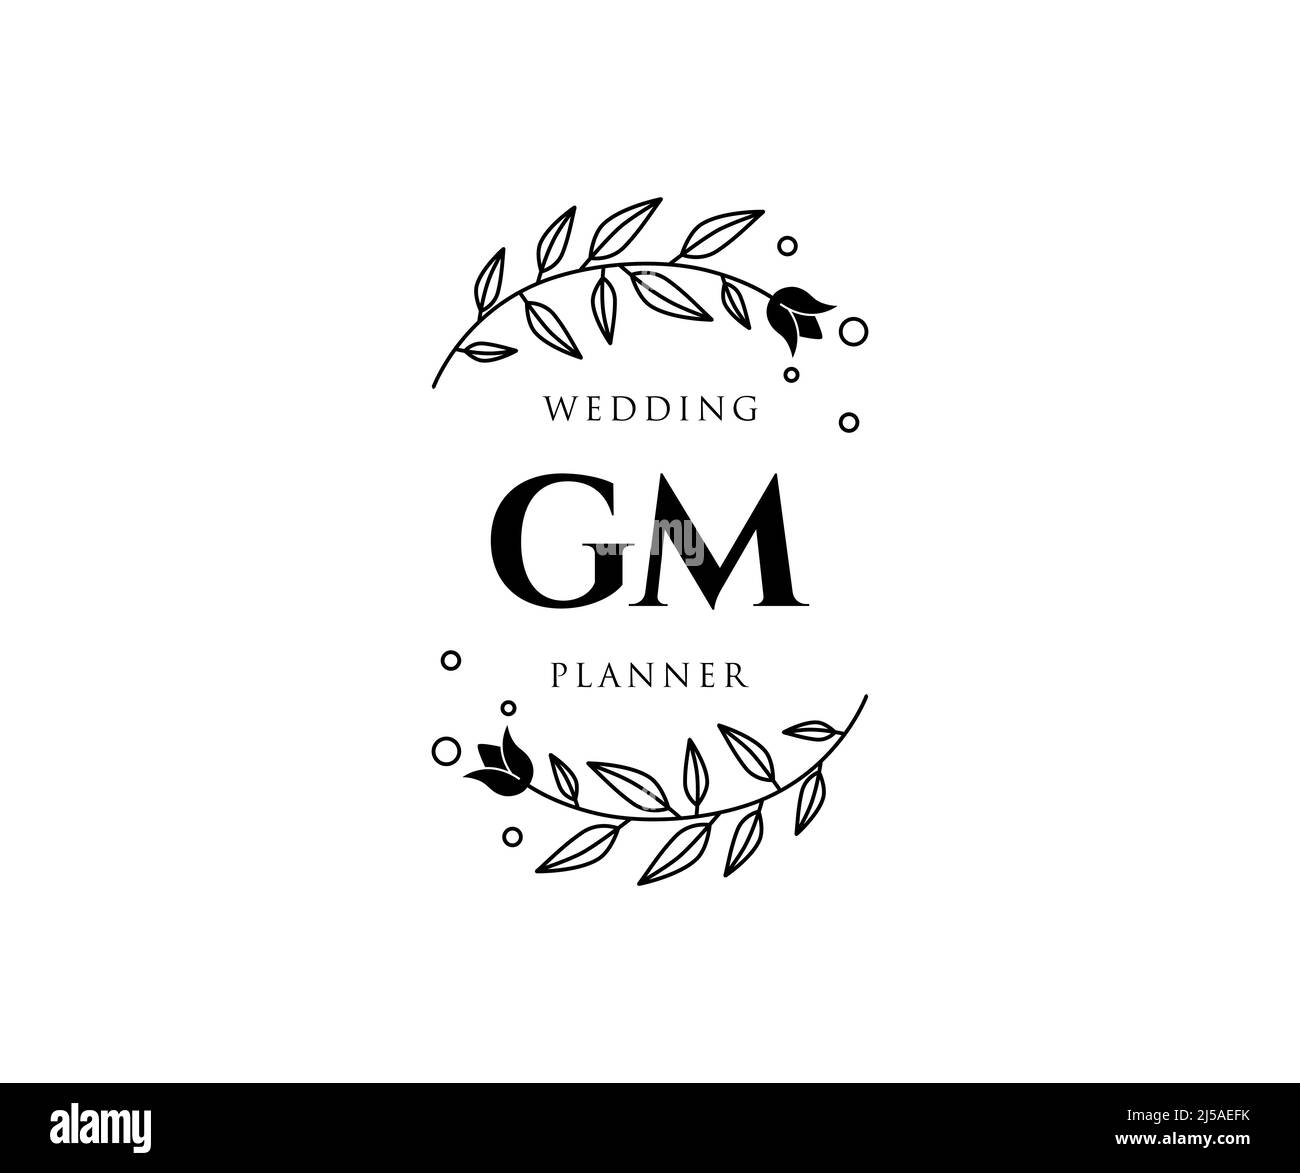 Gm logos Black and White Stock Photos & Images - Alamy